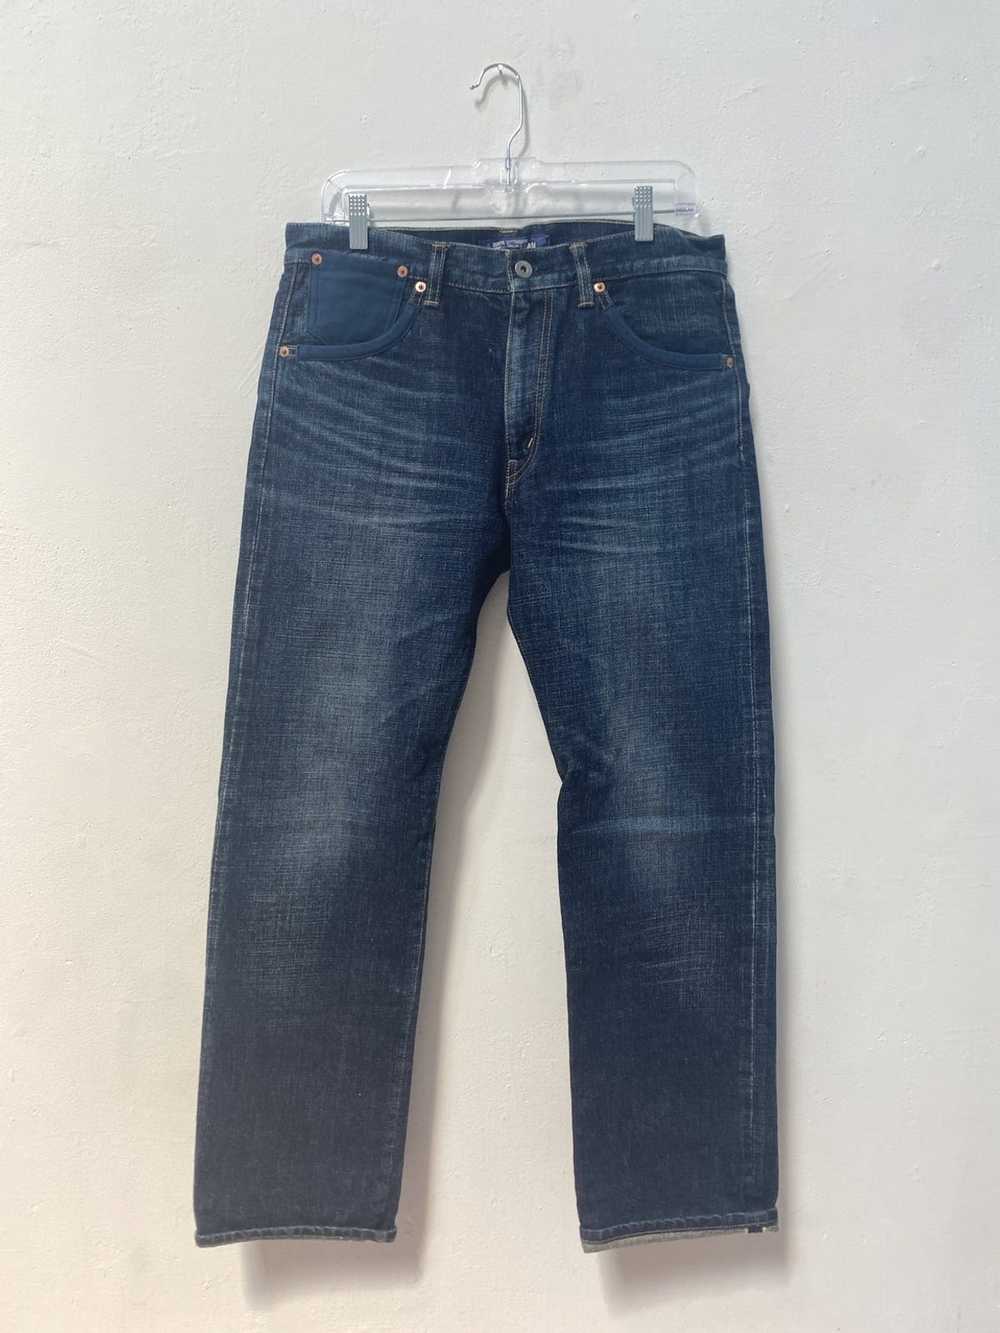 Junya Watanabe AW14 Boro Patterned Jeans - image 2